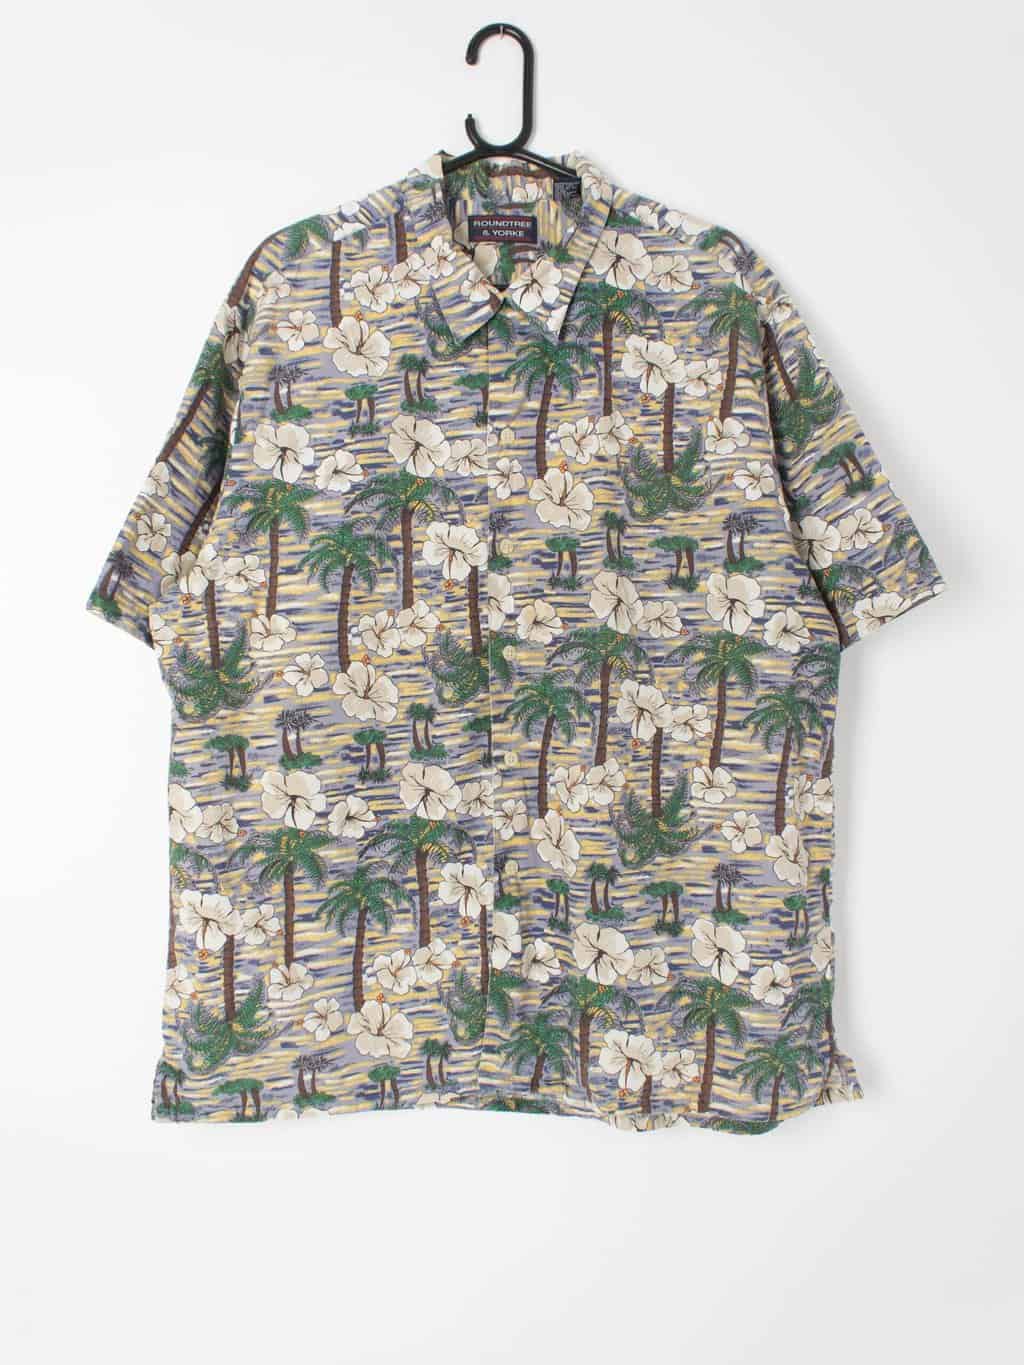 Vintage mens Hawaiian floral Shirt with blue sea green palm trees ...